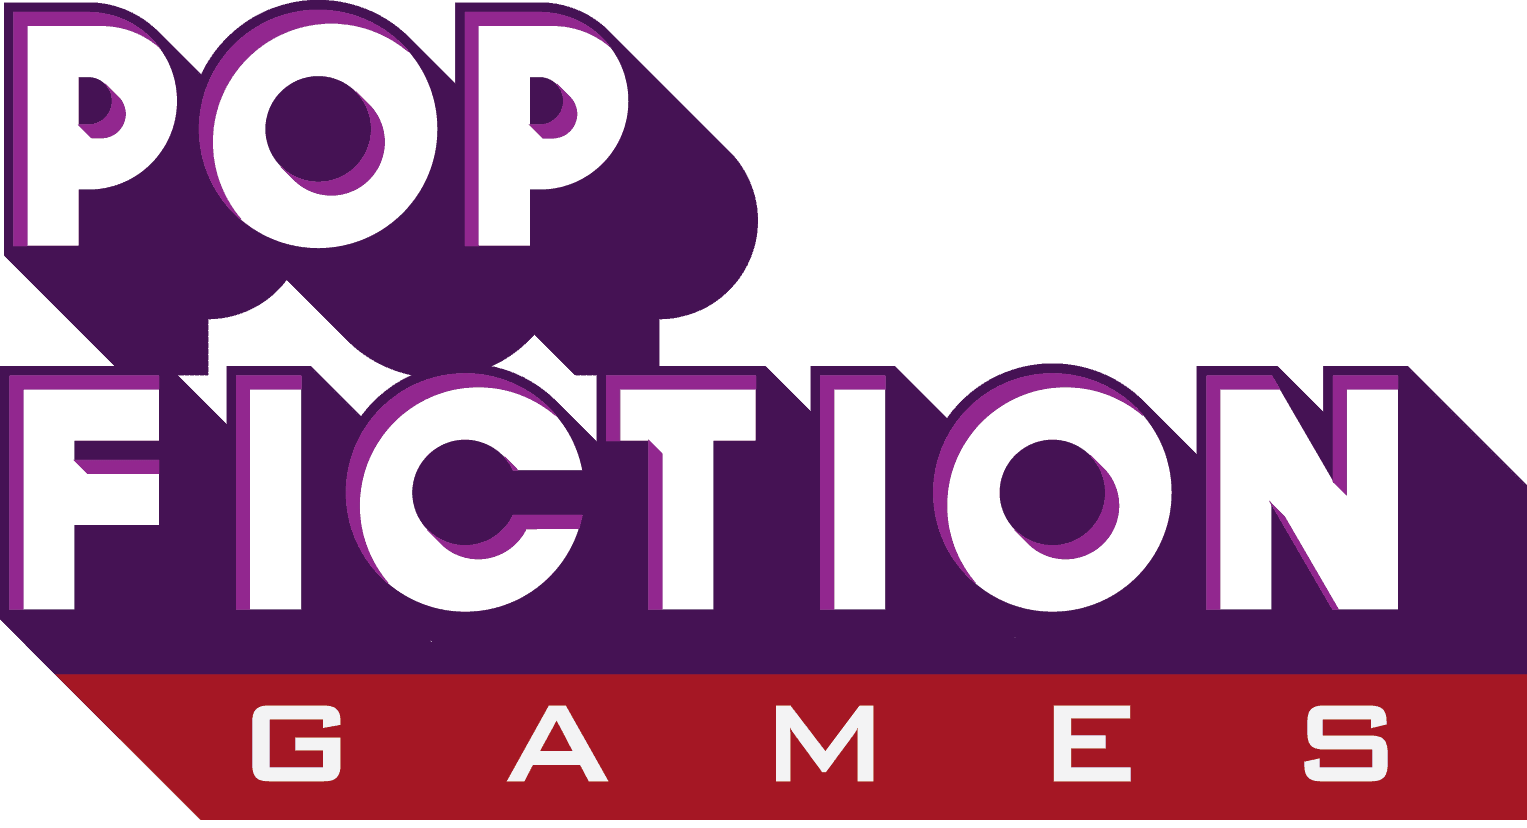 Pop_Fiction_Games_logo_1_29_2020a.png